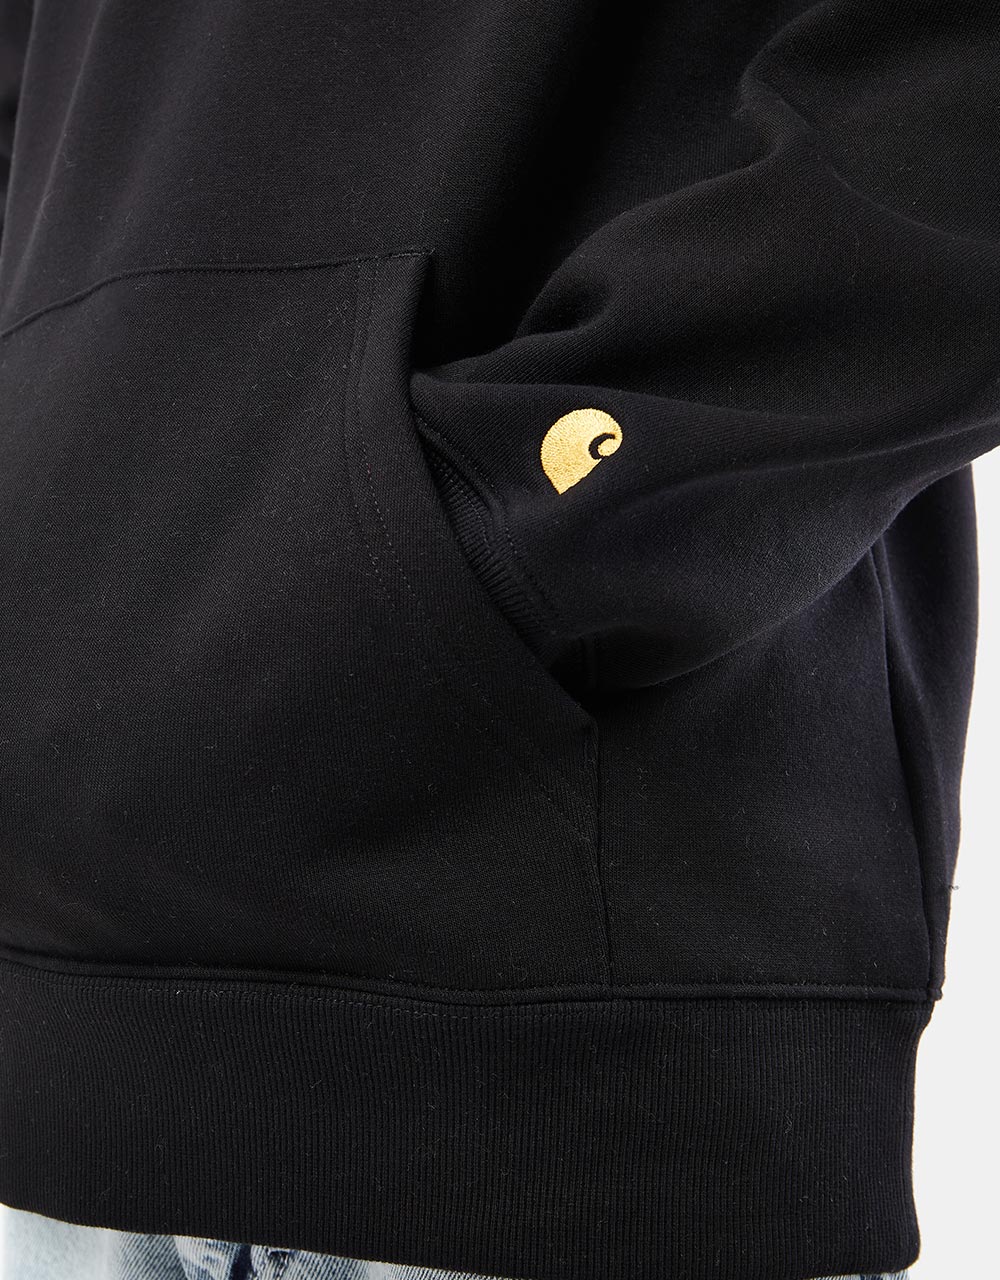 Carhartt WIP Chase Neck Zip Sweatshirt - Black/Gold